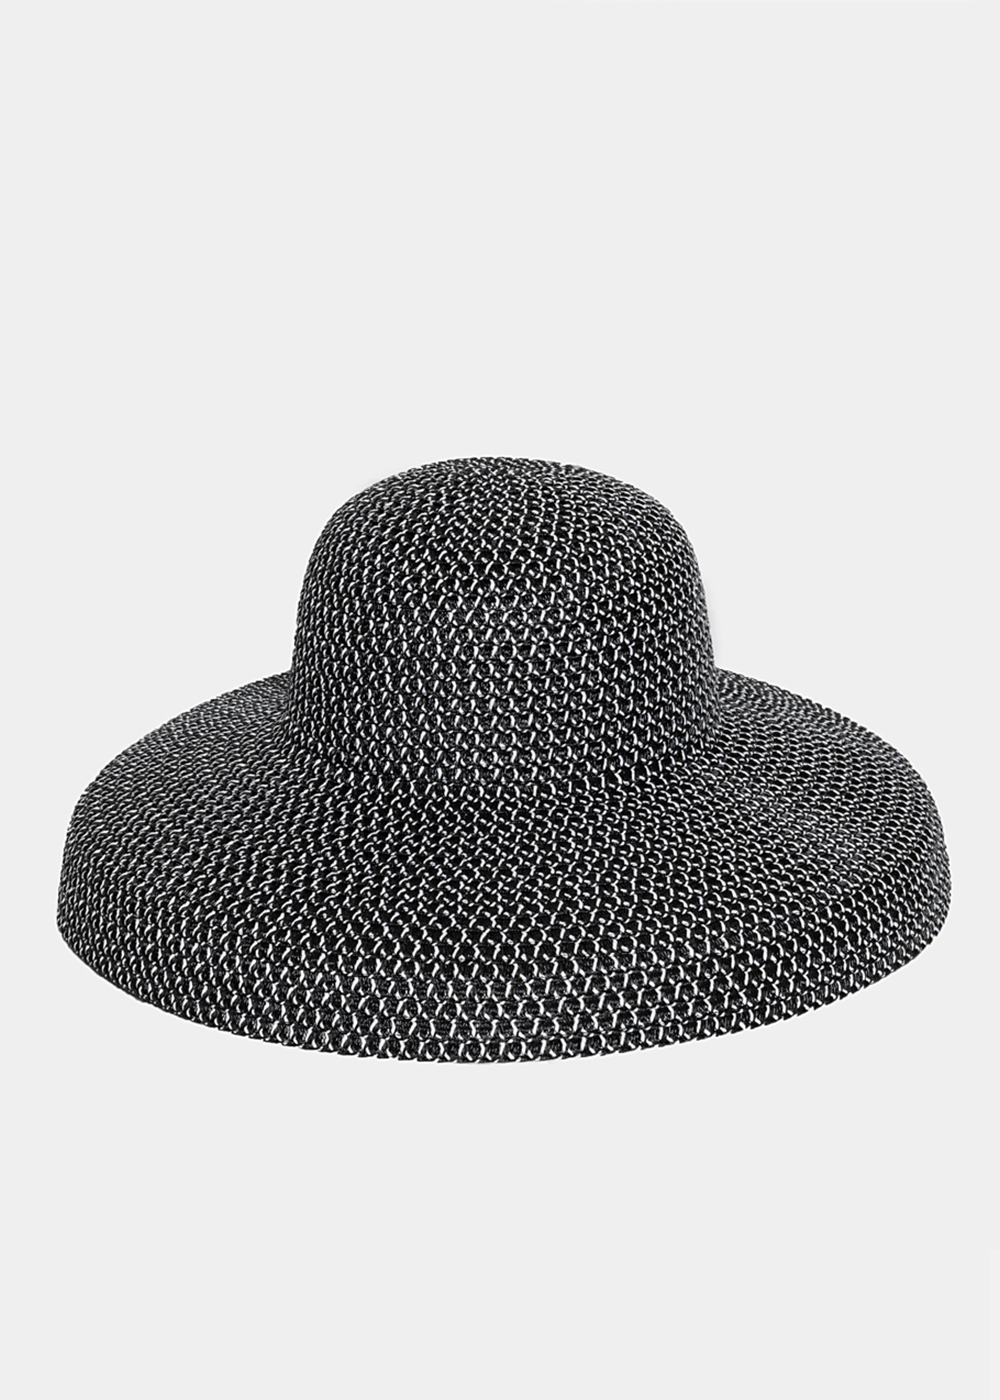 Dark Grey Straw Hat 